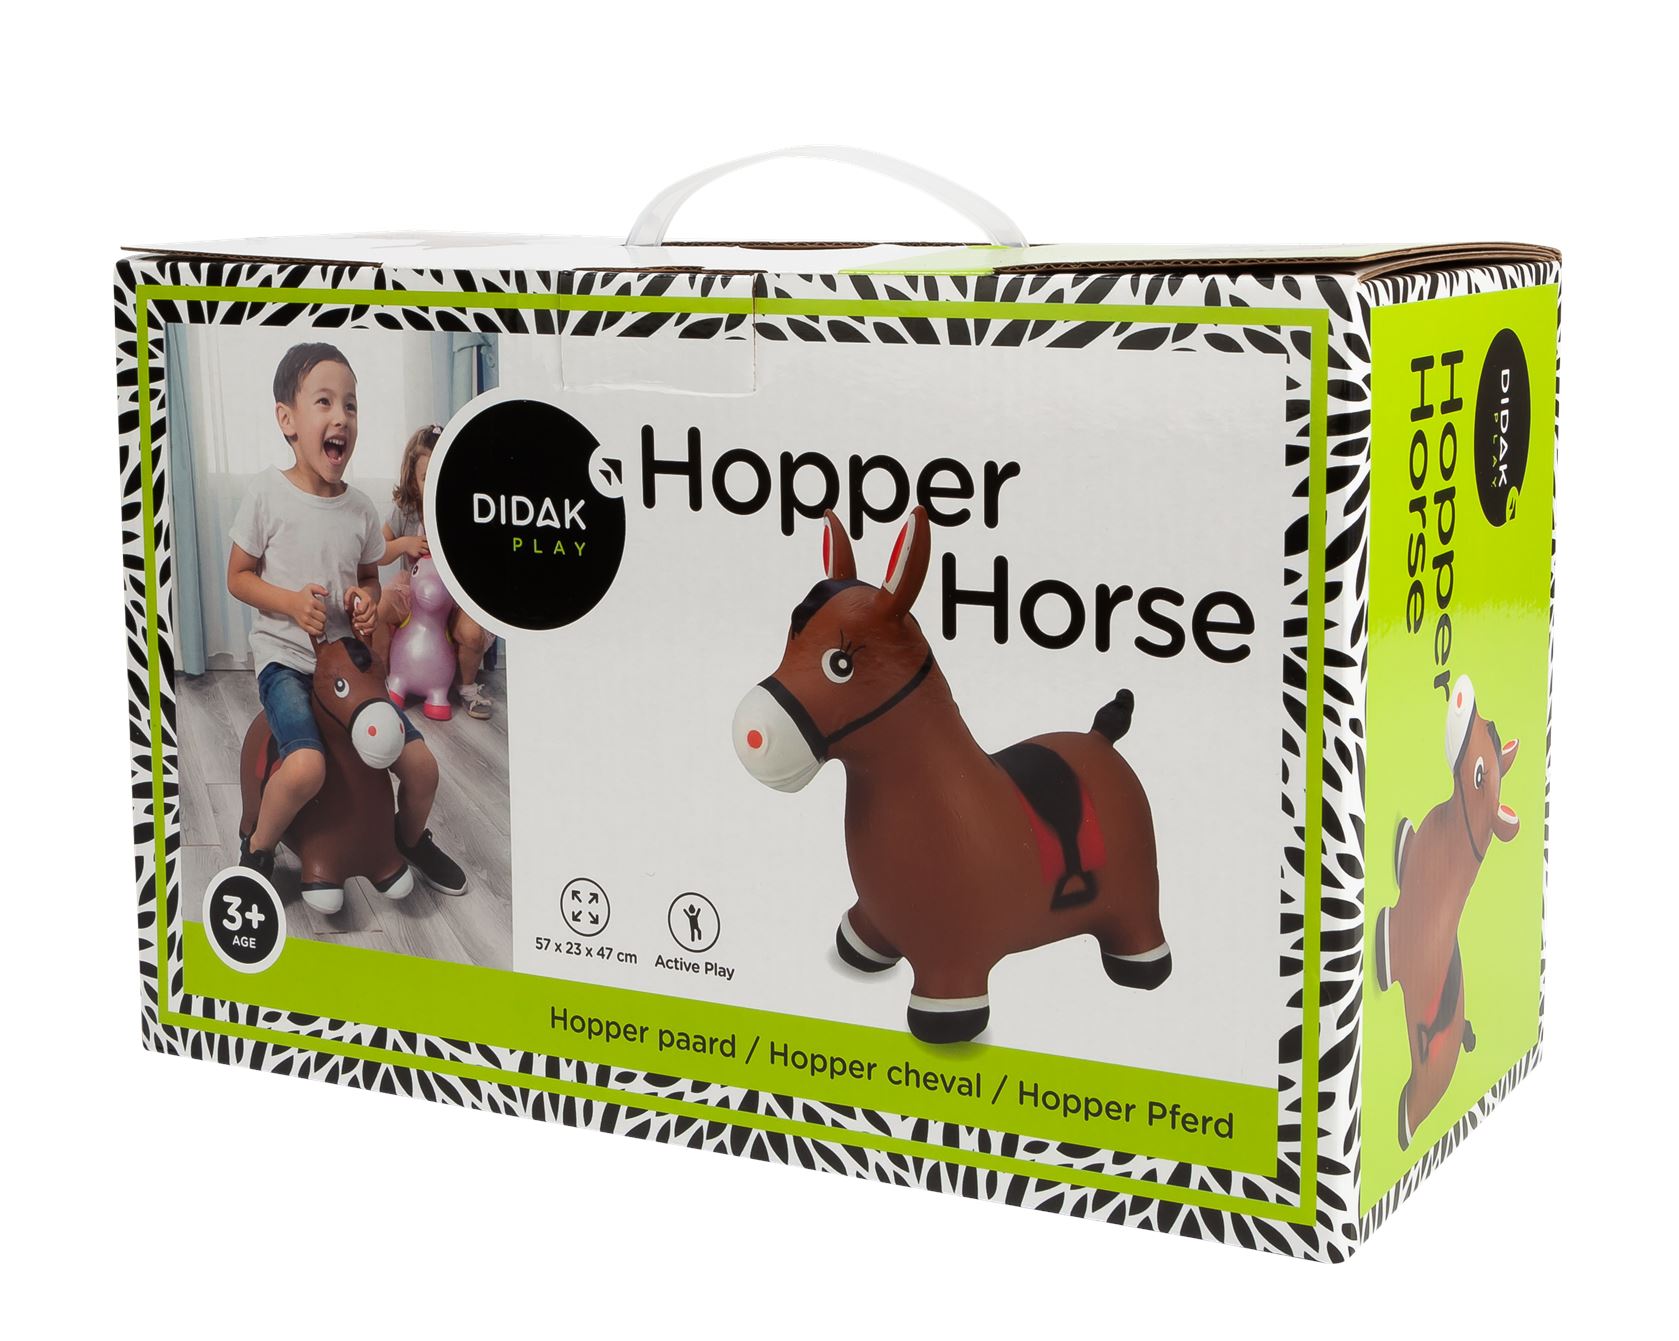 Hopper-Paard-57x23x47-cm